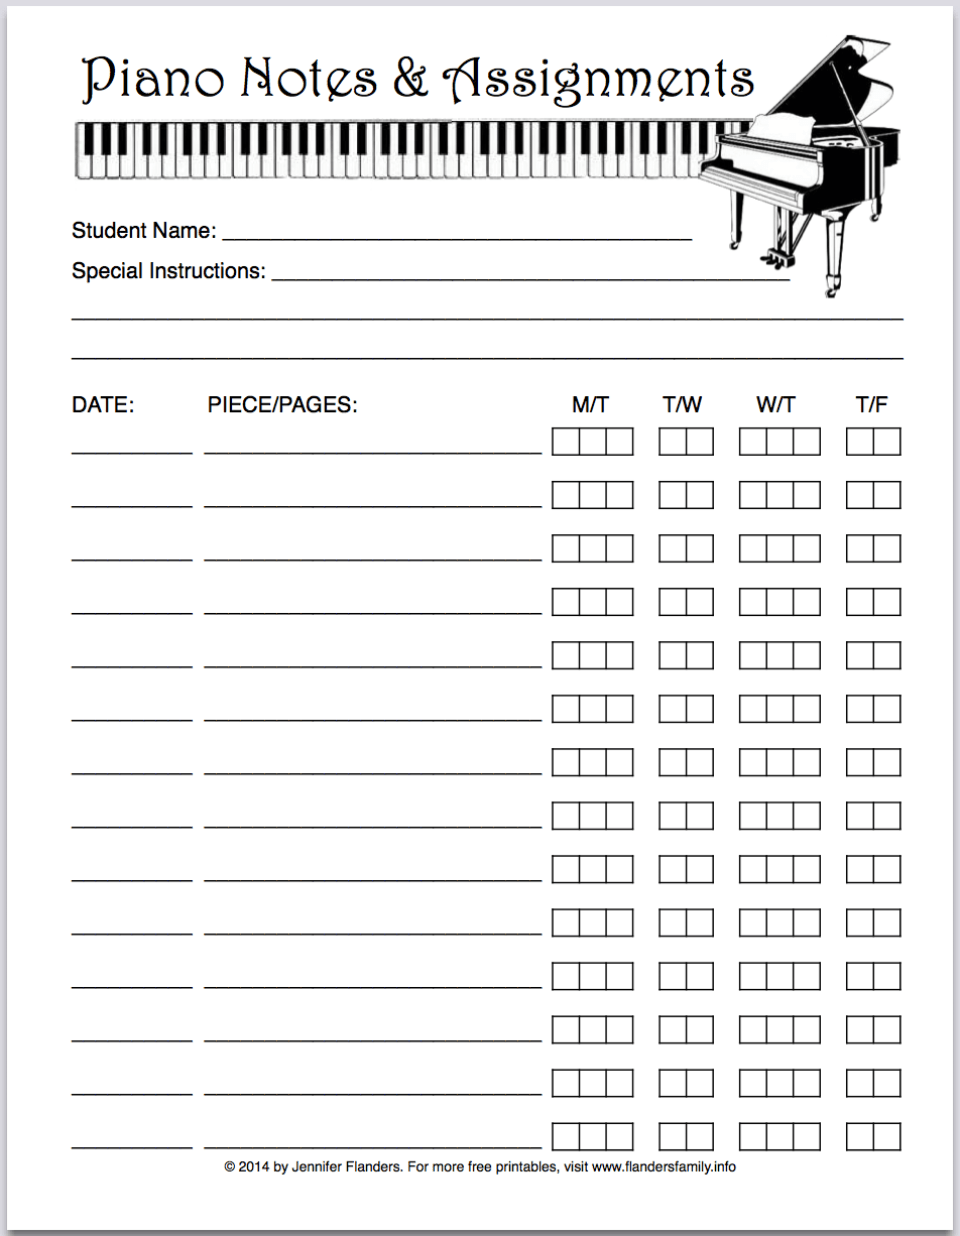 Free printable piano practice record